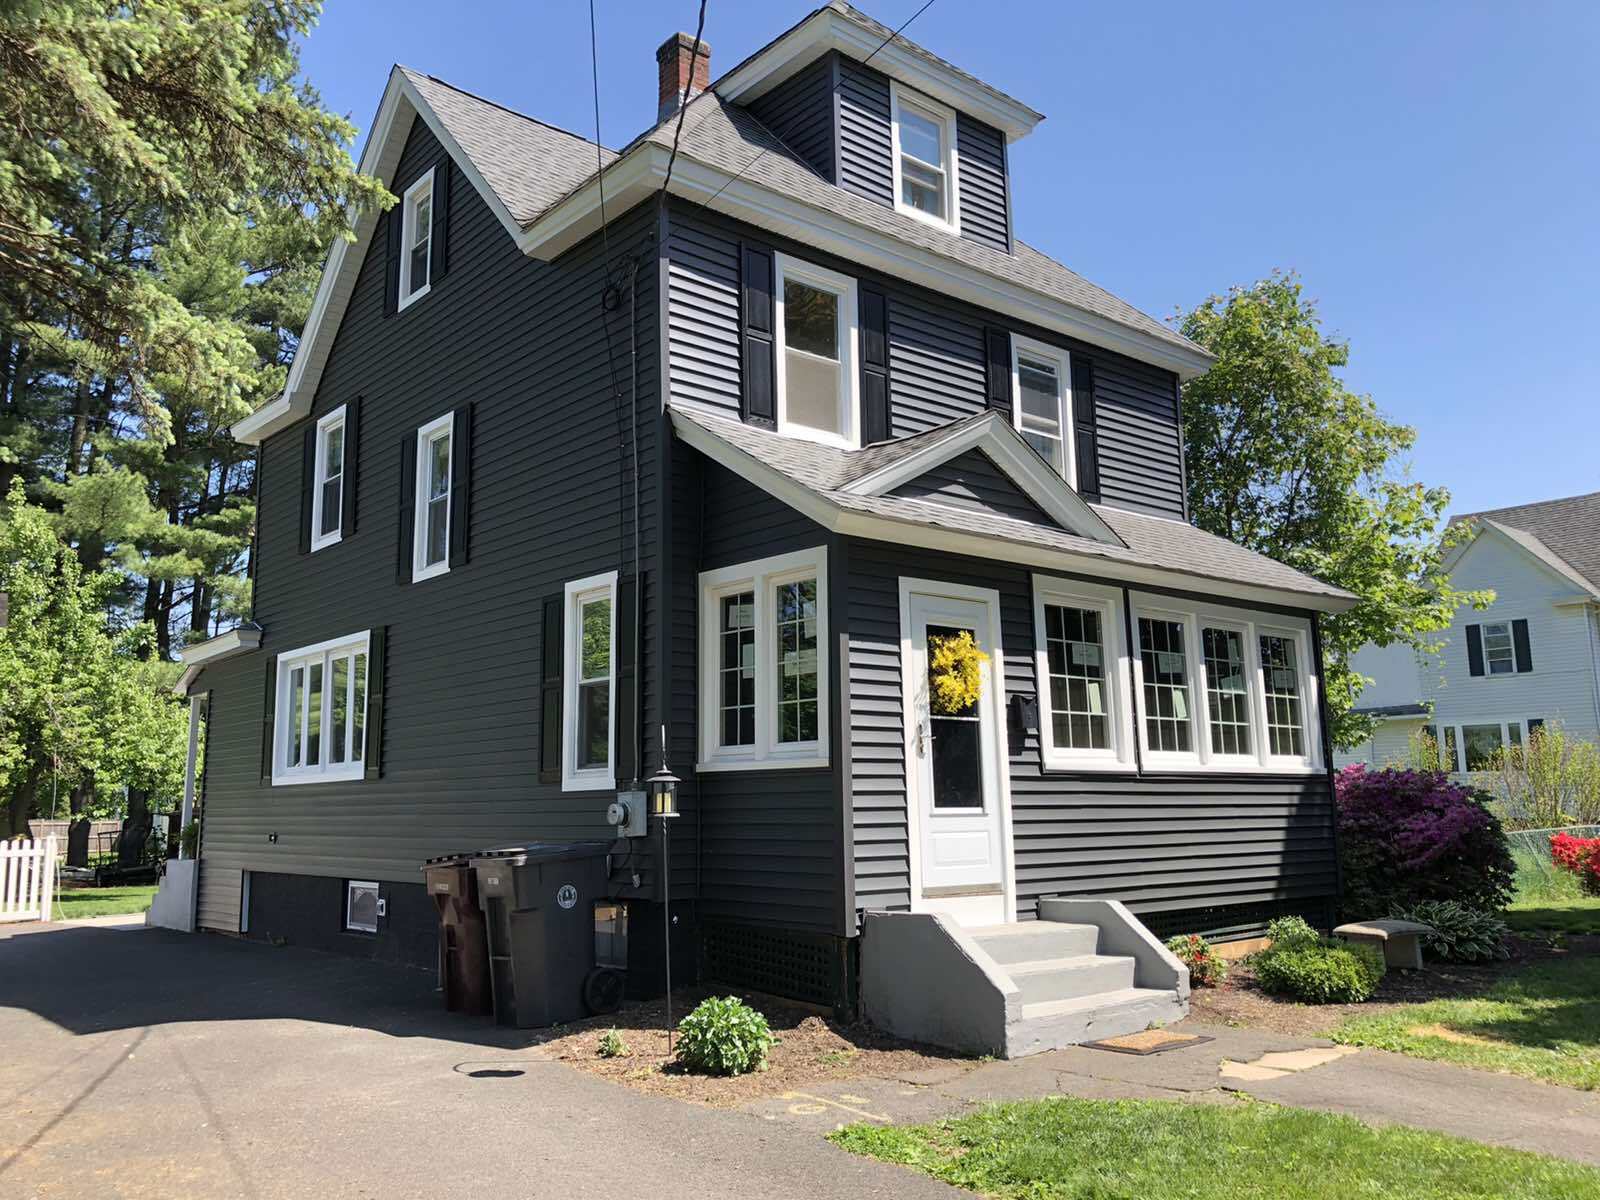 Home improvement services in Avon Connecticut